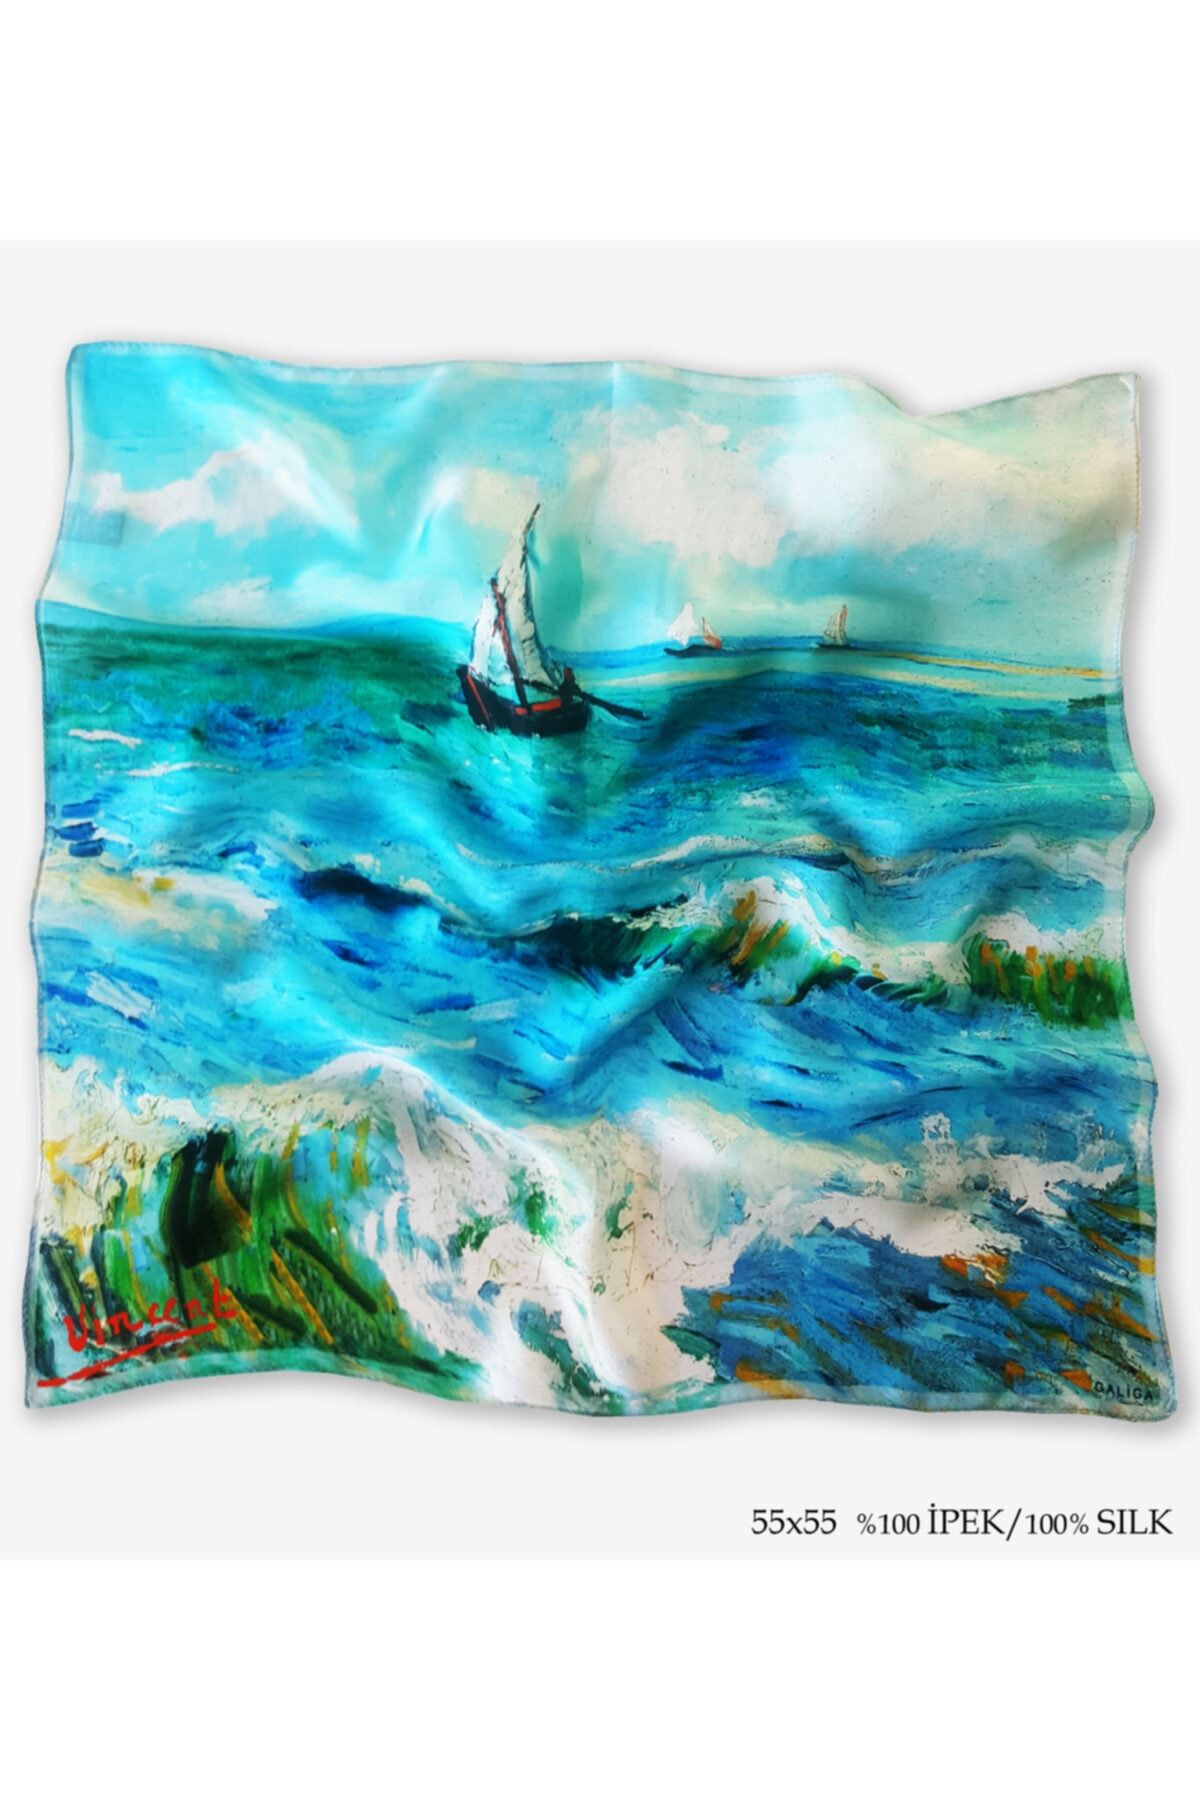 Galiga Van Gogh-seascape %100 Ipek Fular 55x55cm 'art On Silk'